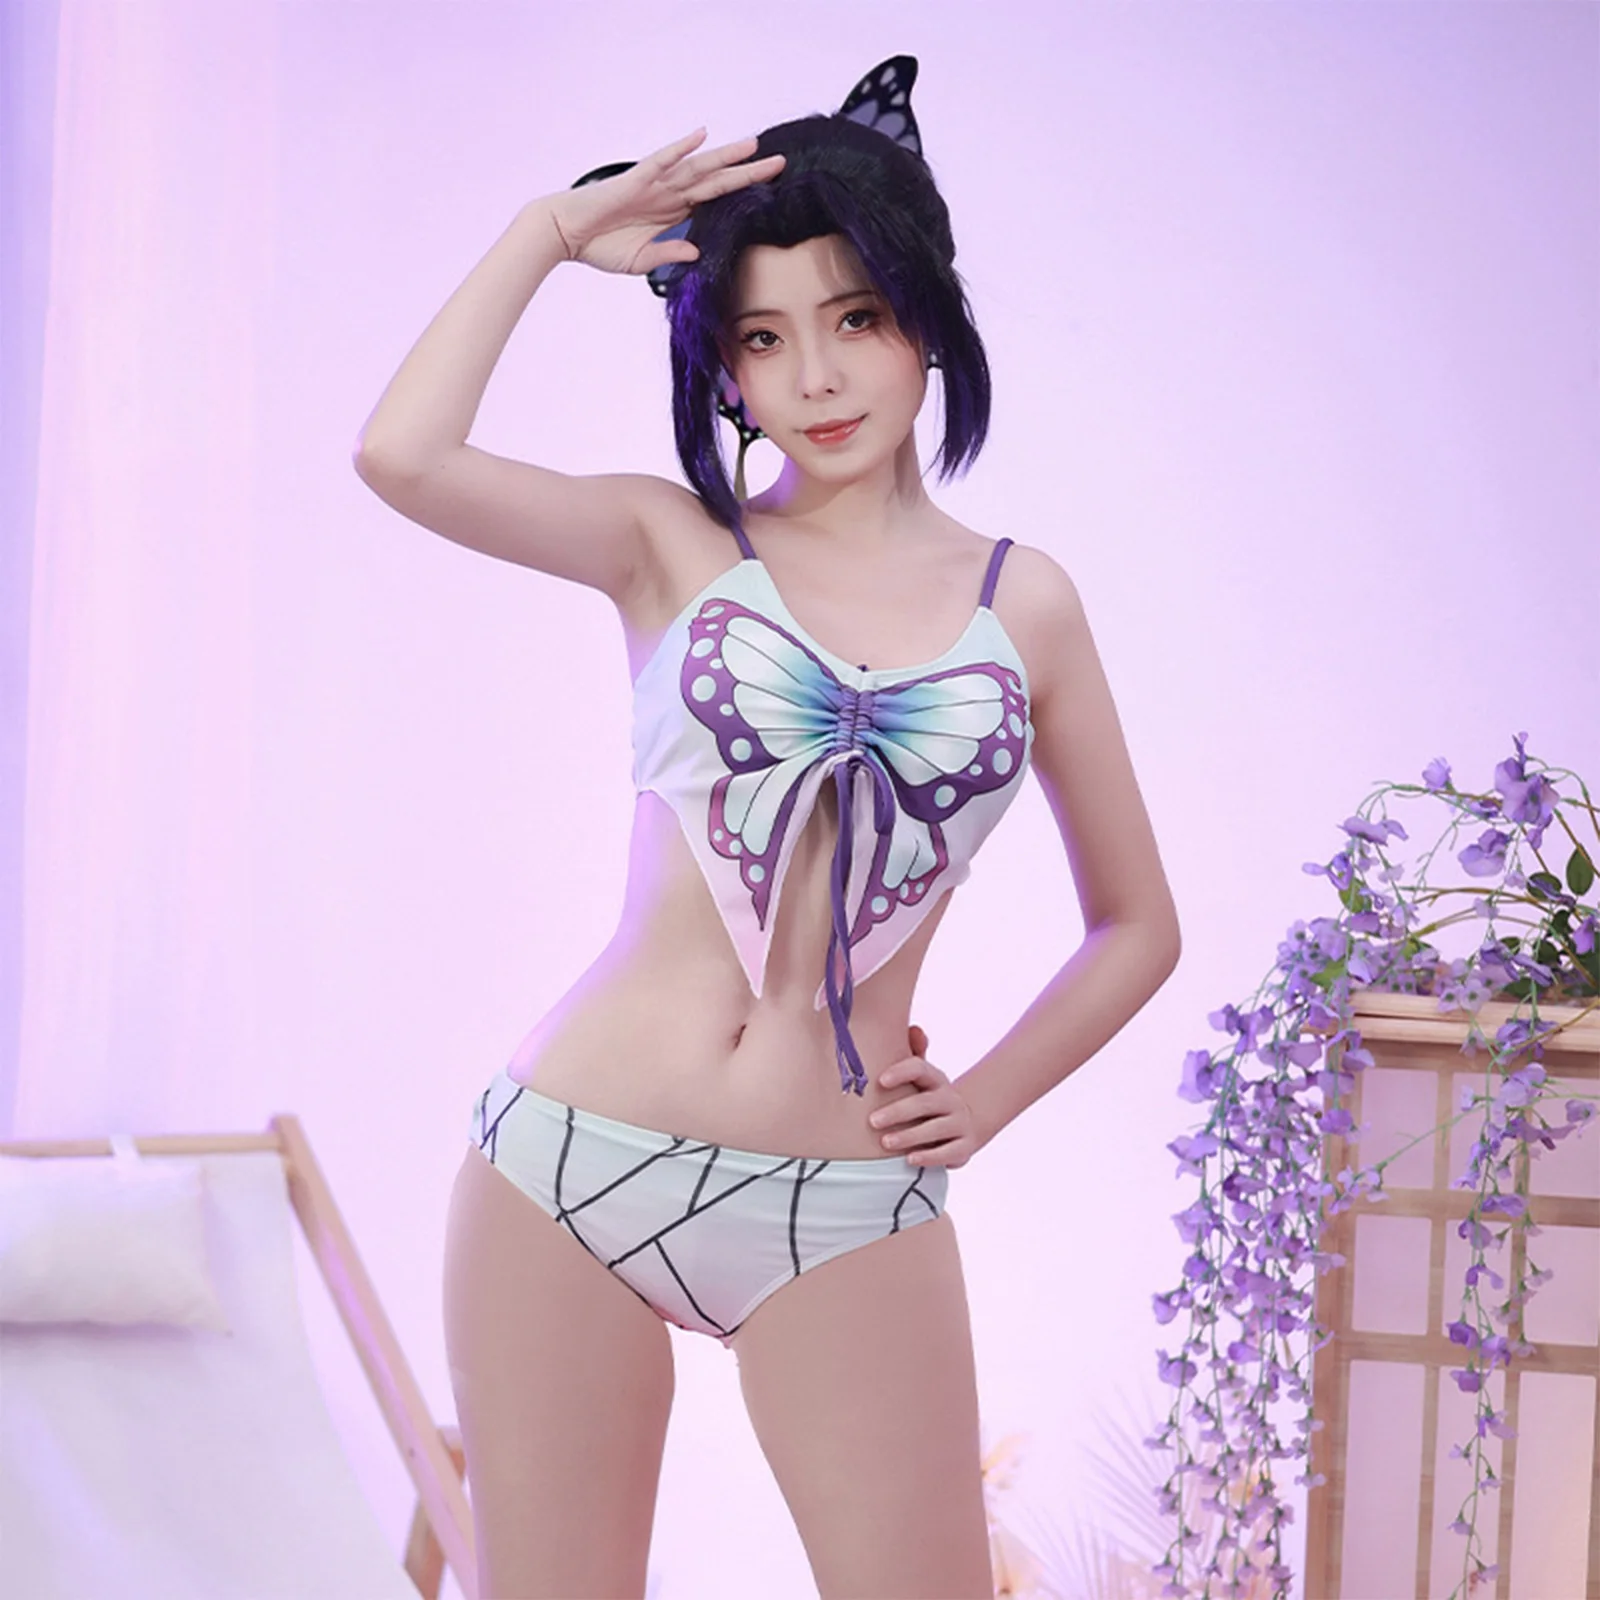 Women Two Piece Bikini Set Shinobu Swimsuit Lace Up Bathing Suit +